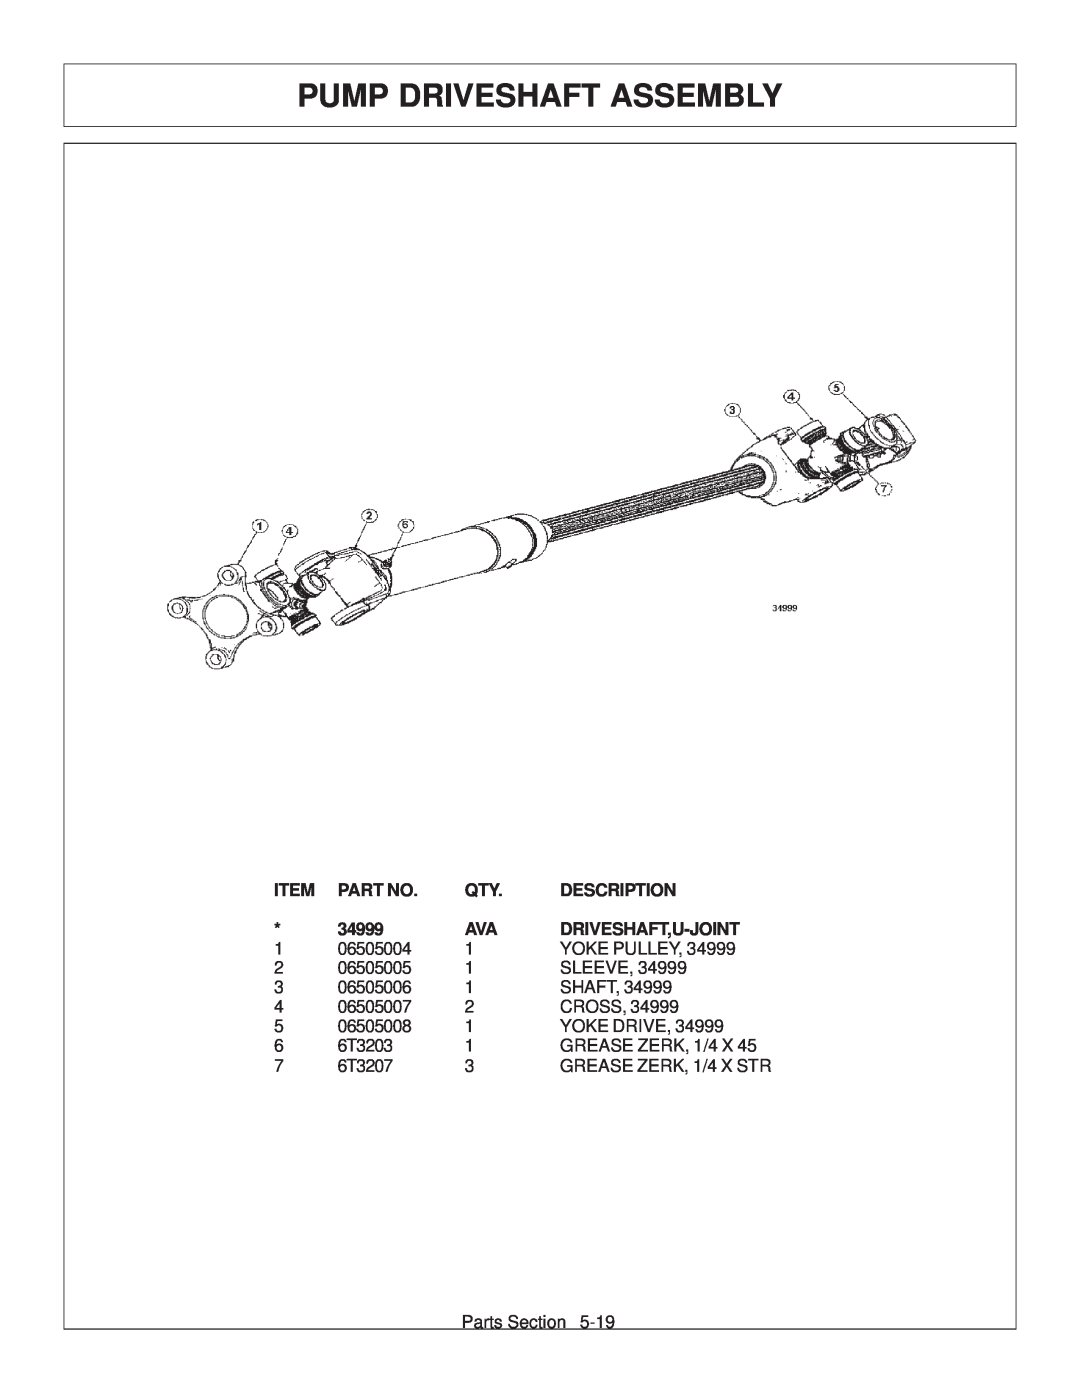 Tiger JD 62-6420 manual Pump Driveshaft Assembly, Description, 34999, Driveshaft,U-Joint 